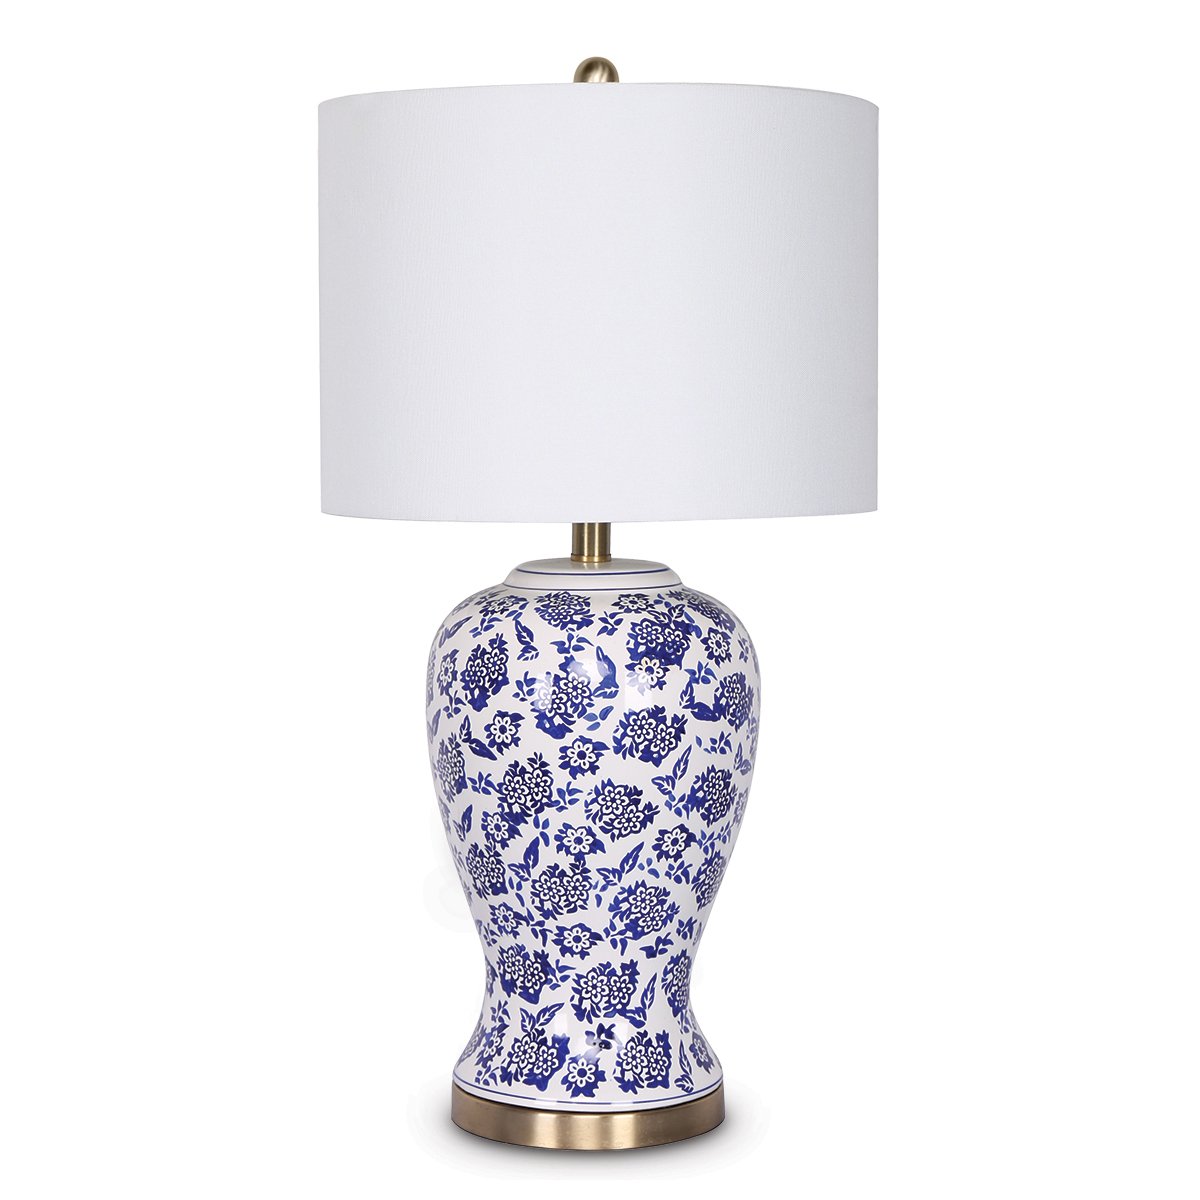 Sarantino Table Lamp Ceramic Floral Base Cotton Drum Shade 2